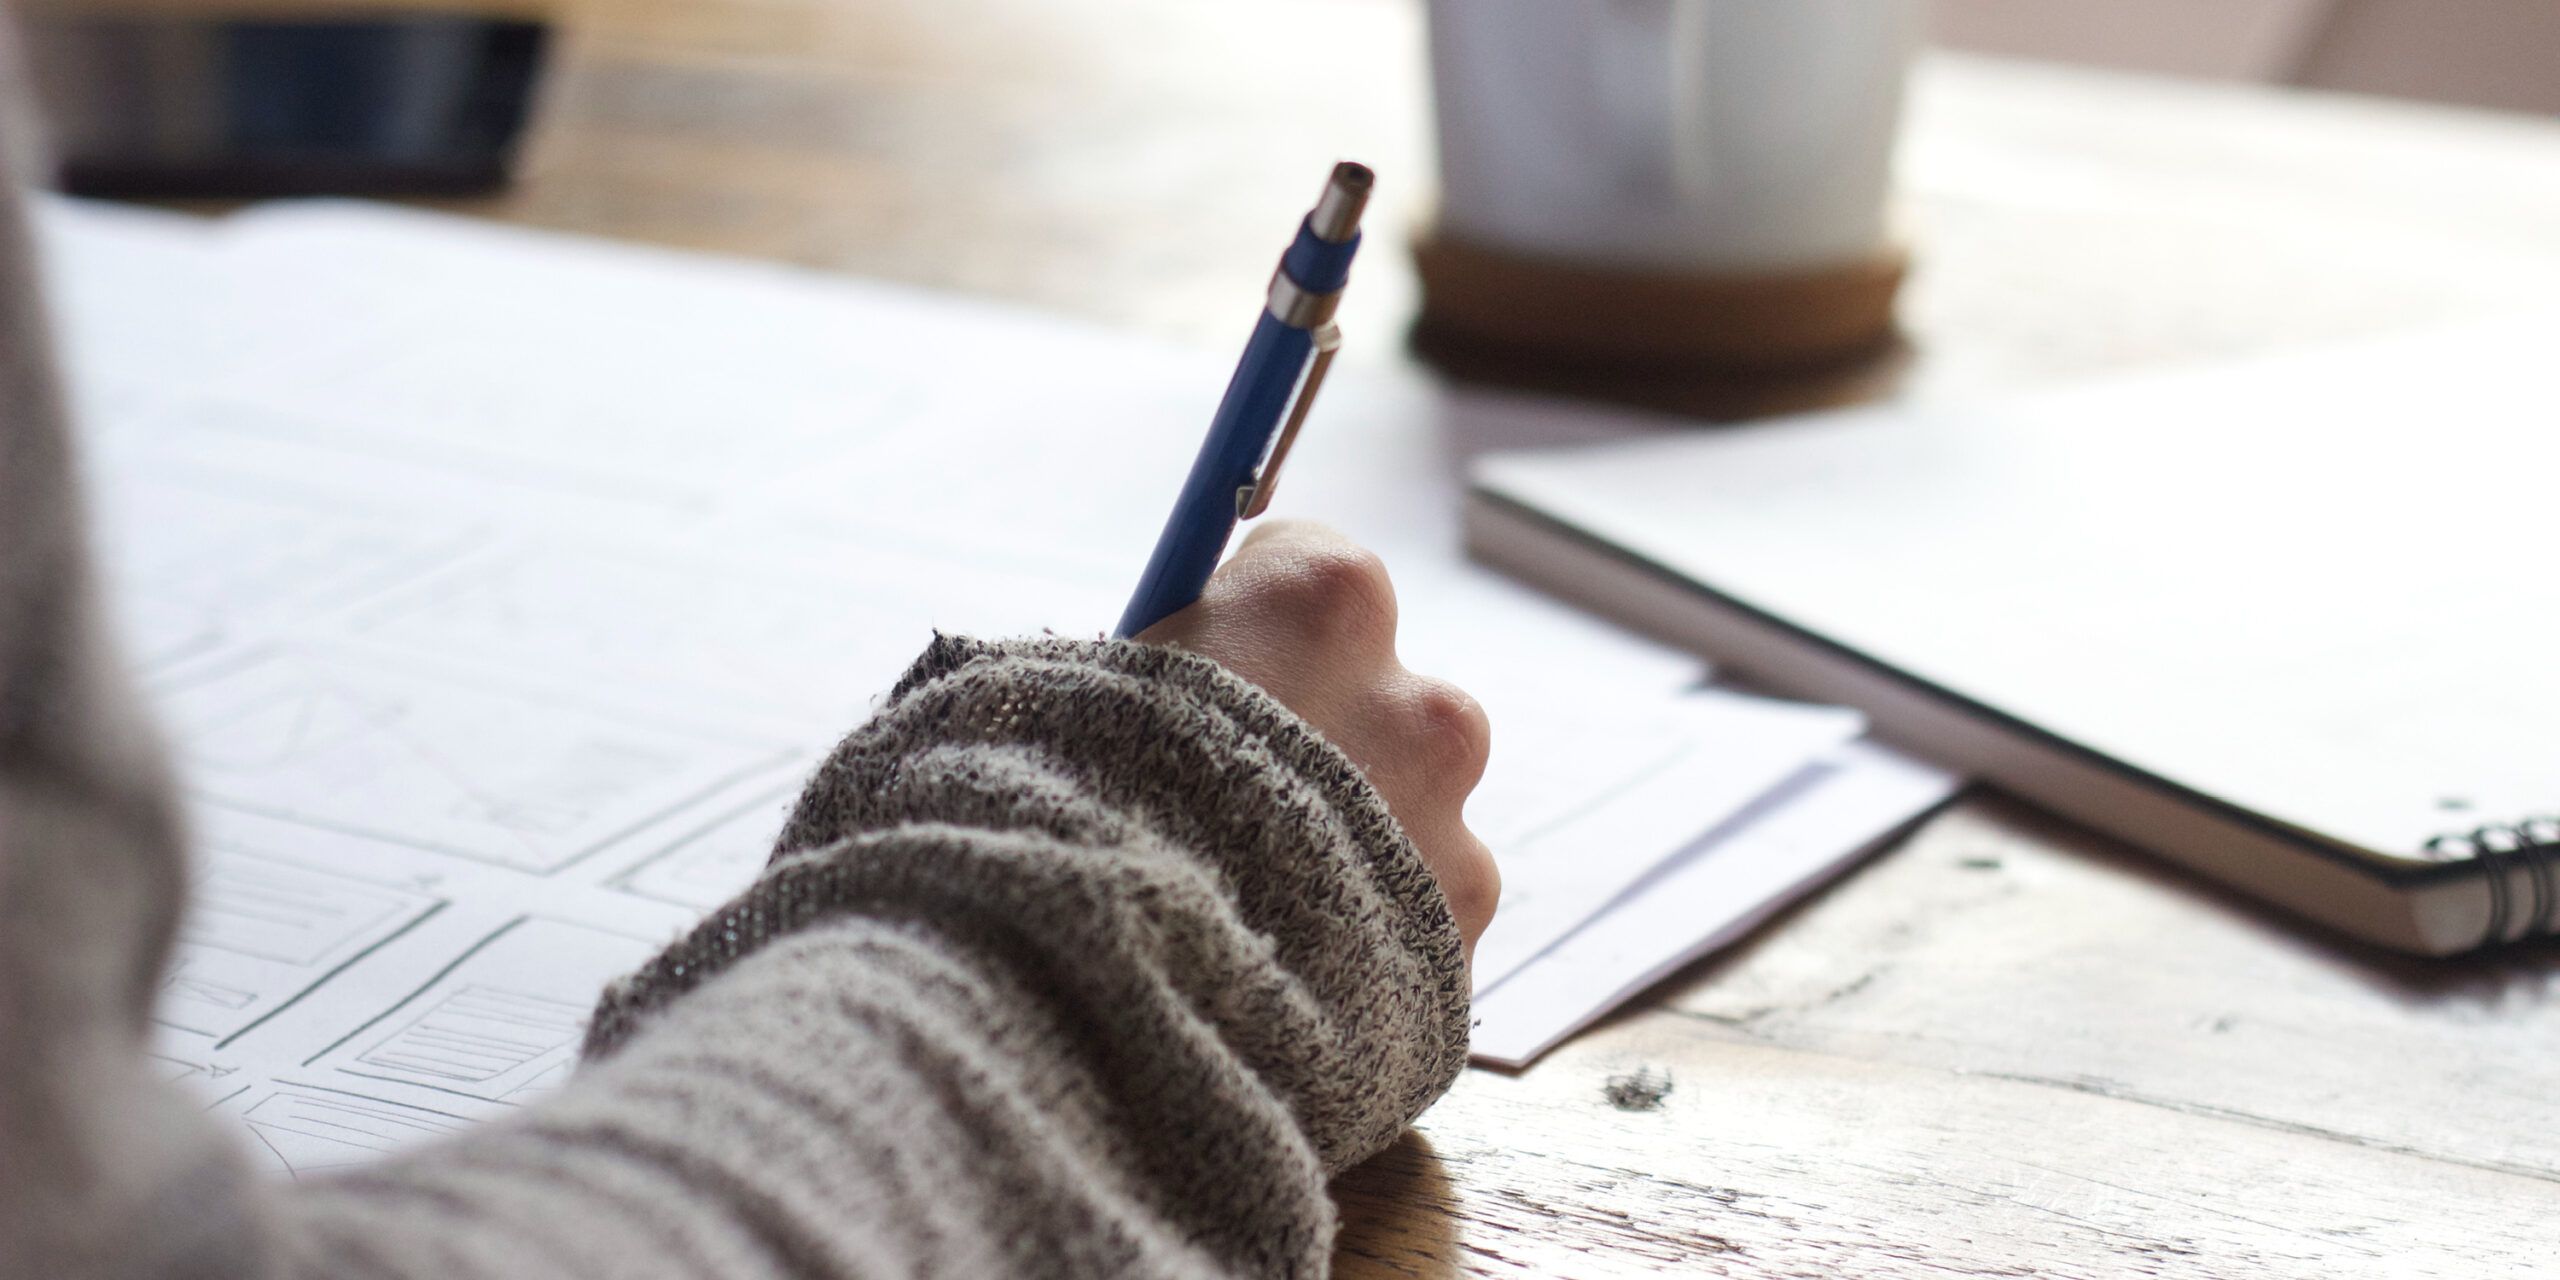 Five reasons to study creative writing